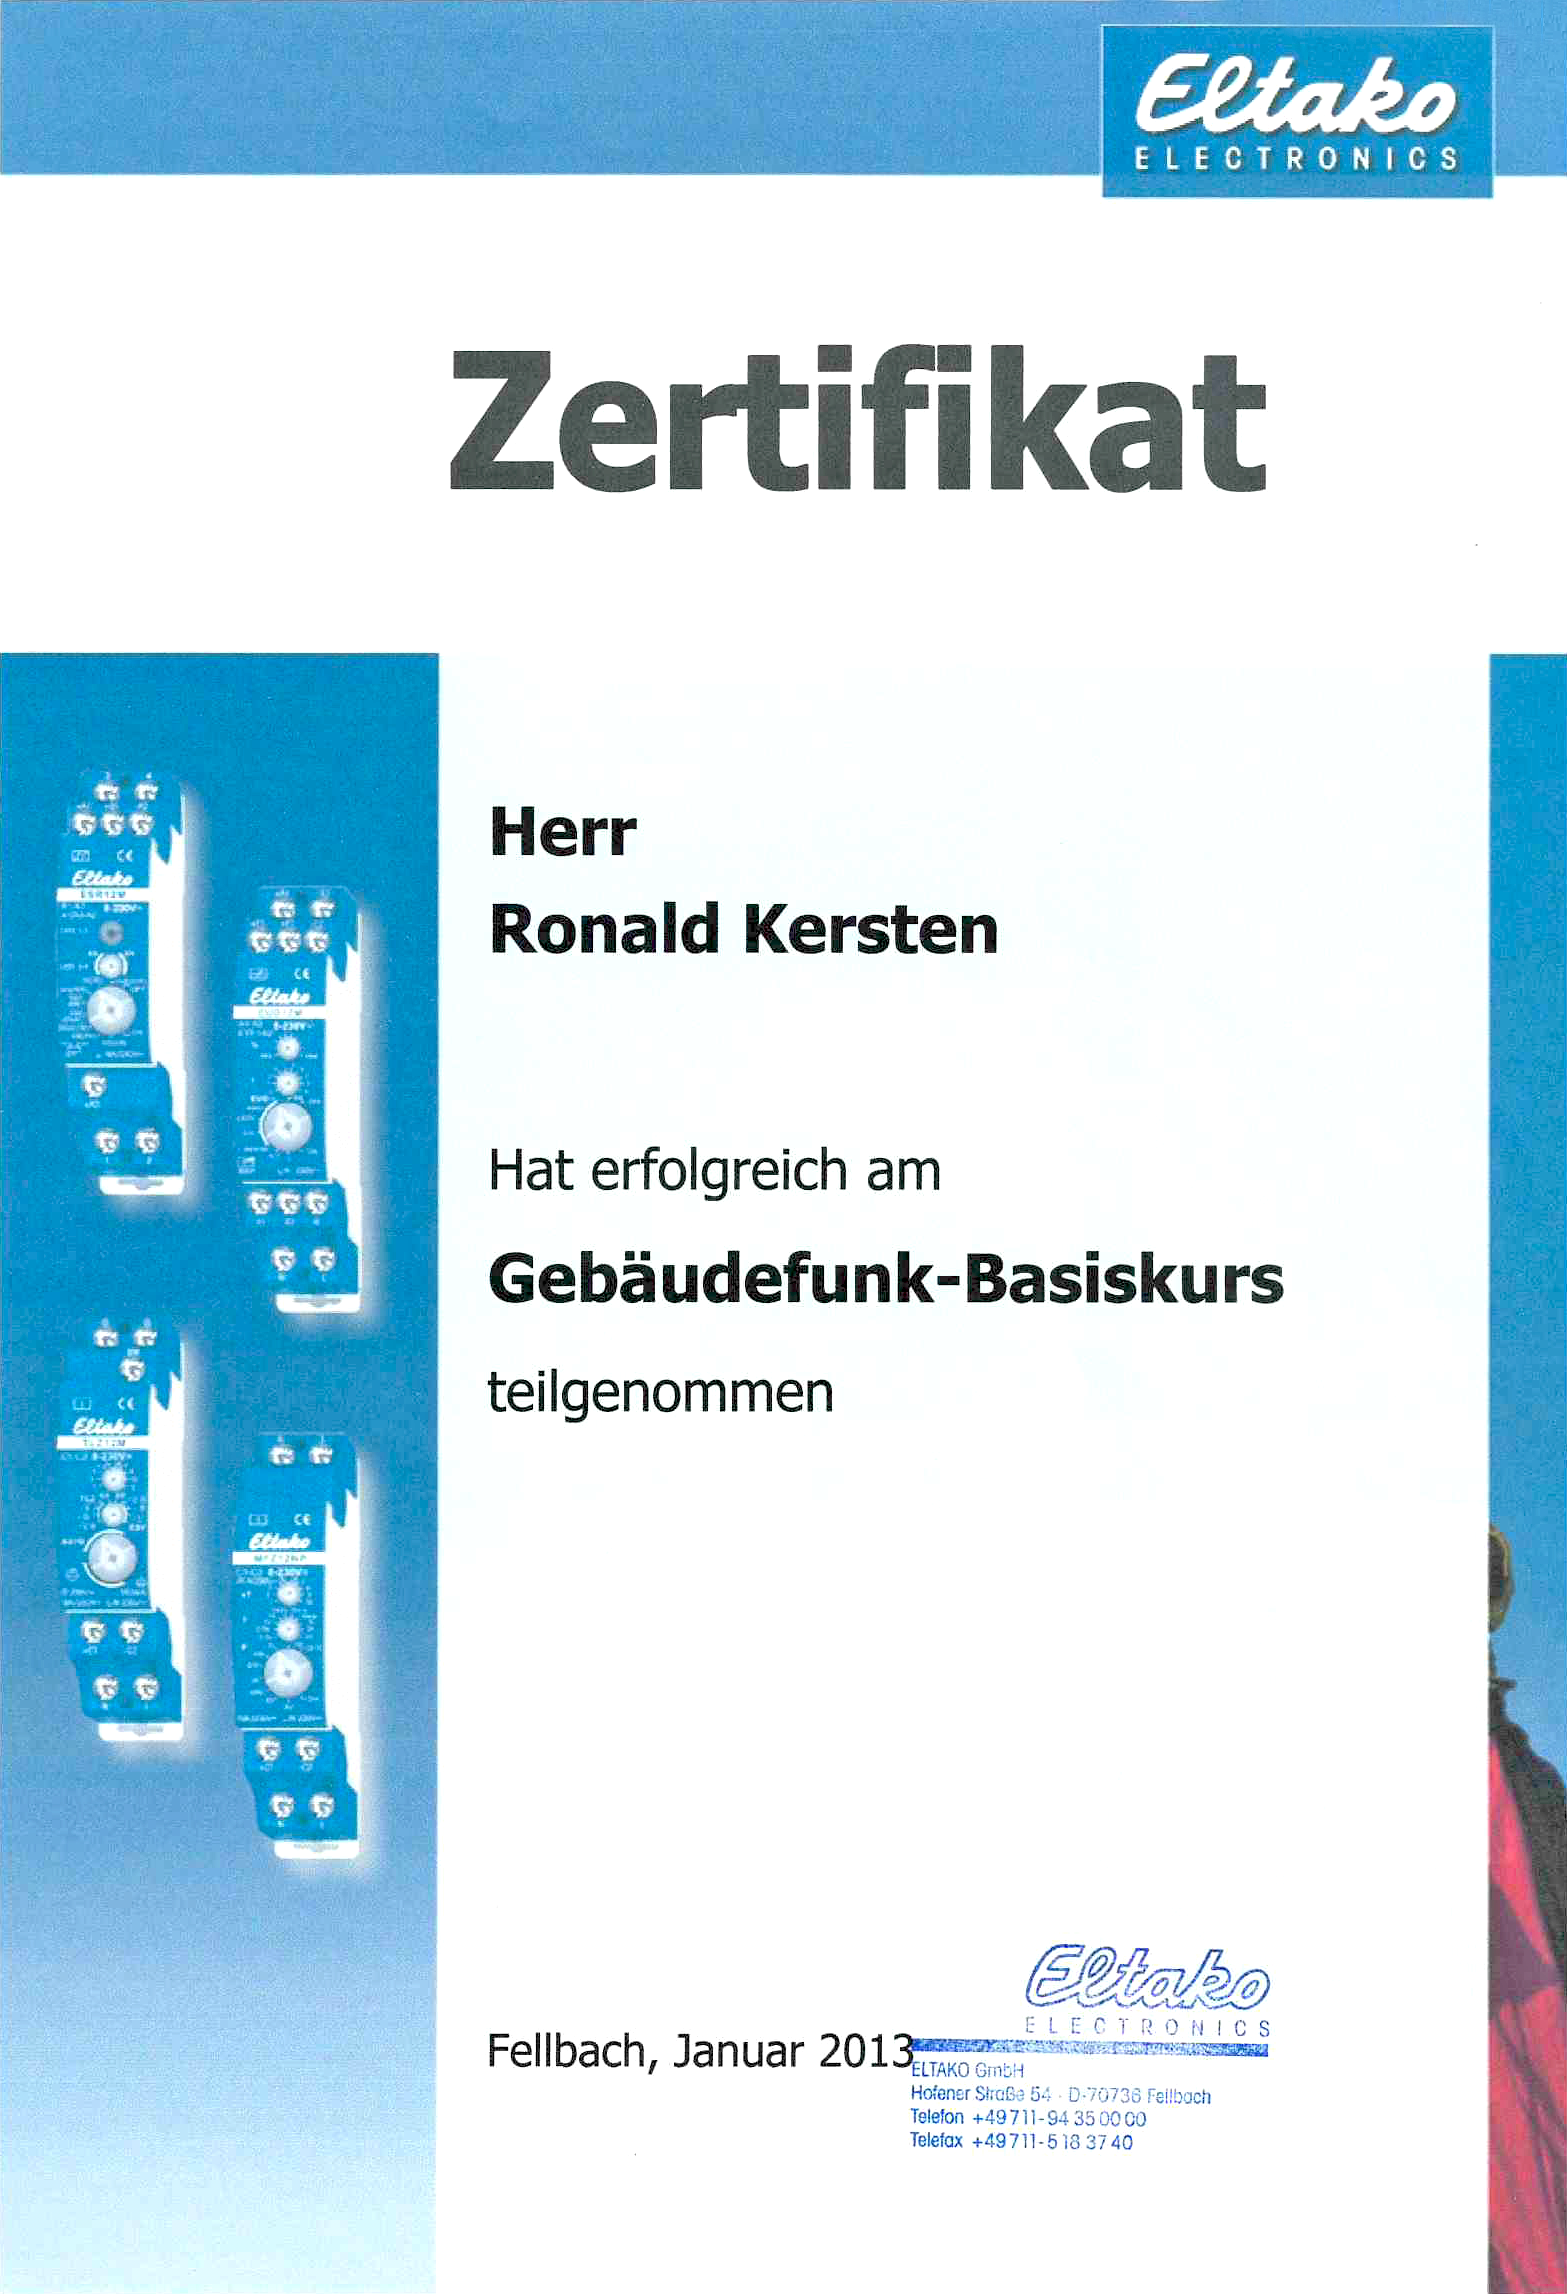 Ronald Kersten; Gebäudefunk-Basiskurs